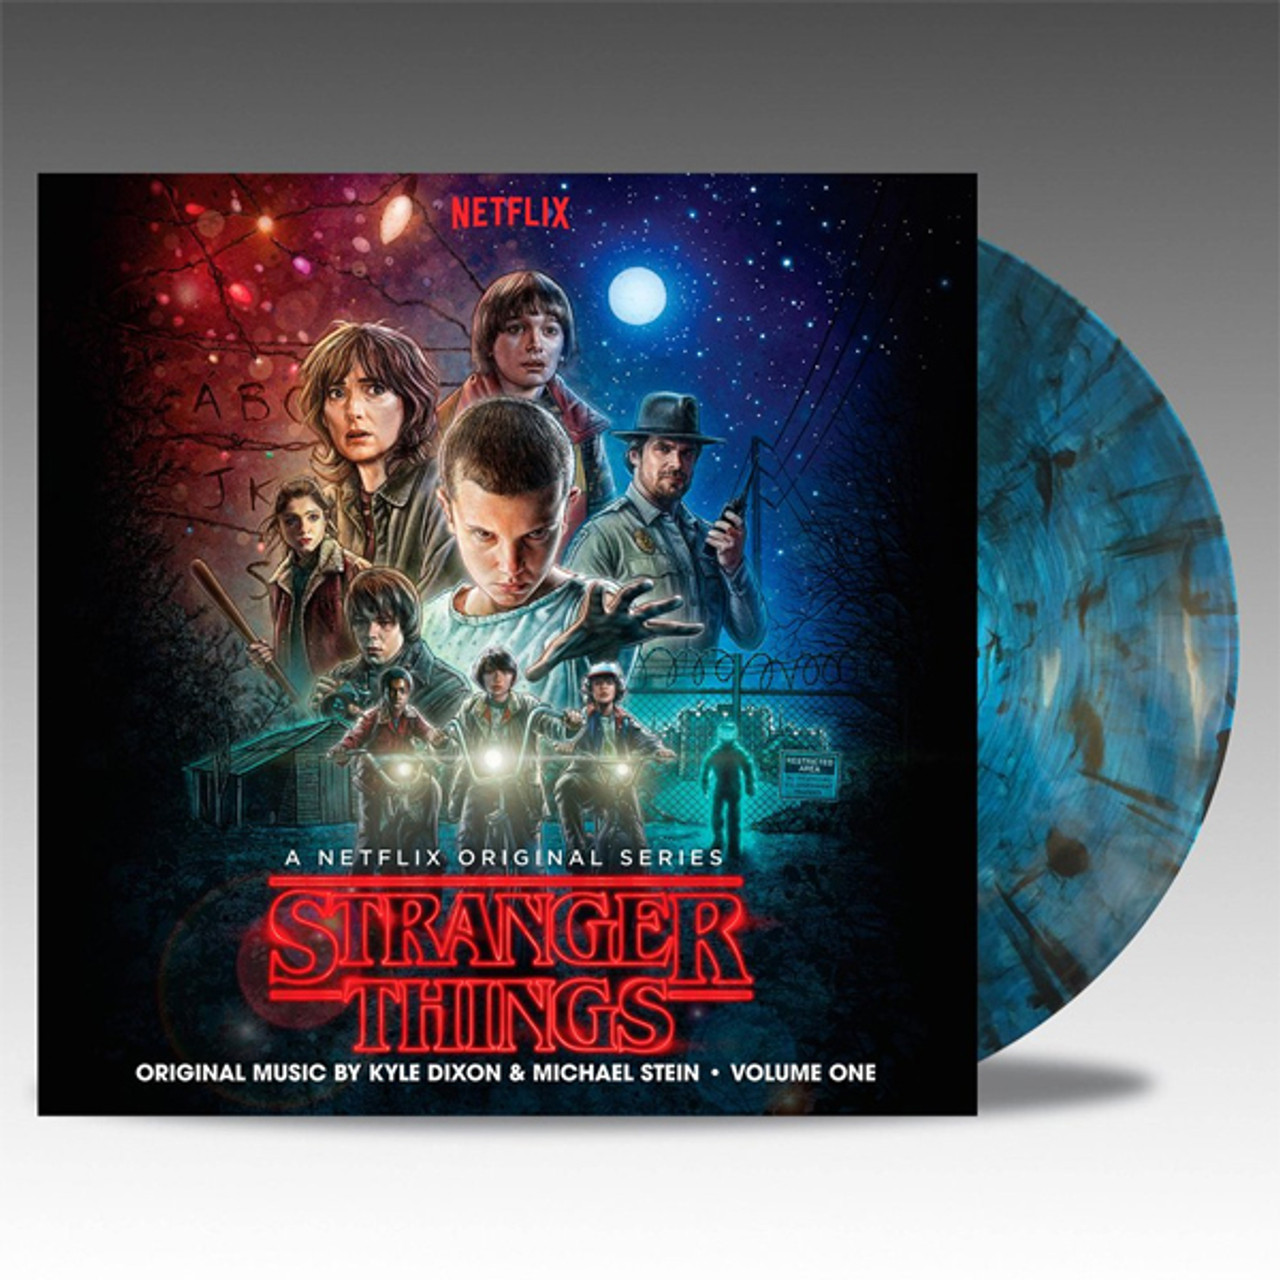 Stranger Things 4 (Score Album) Part.1  Original Score From The Netflix  Series 